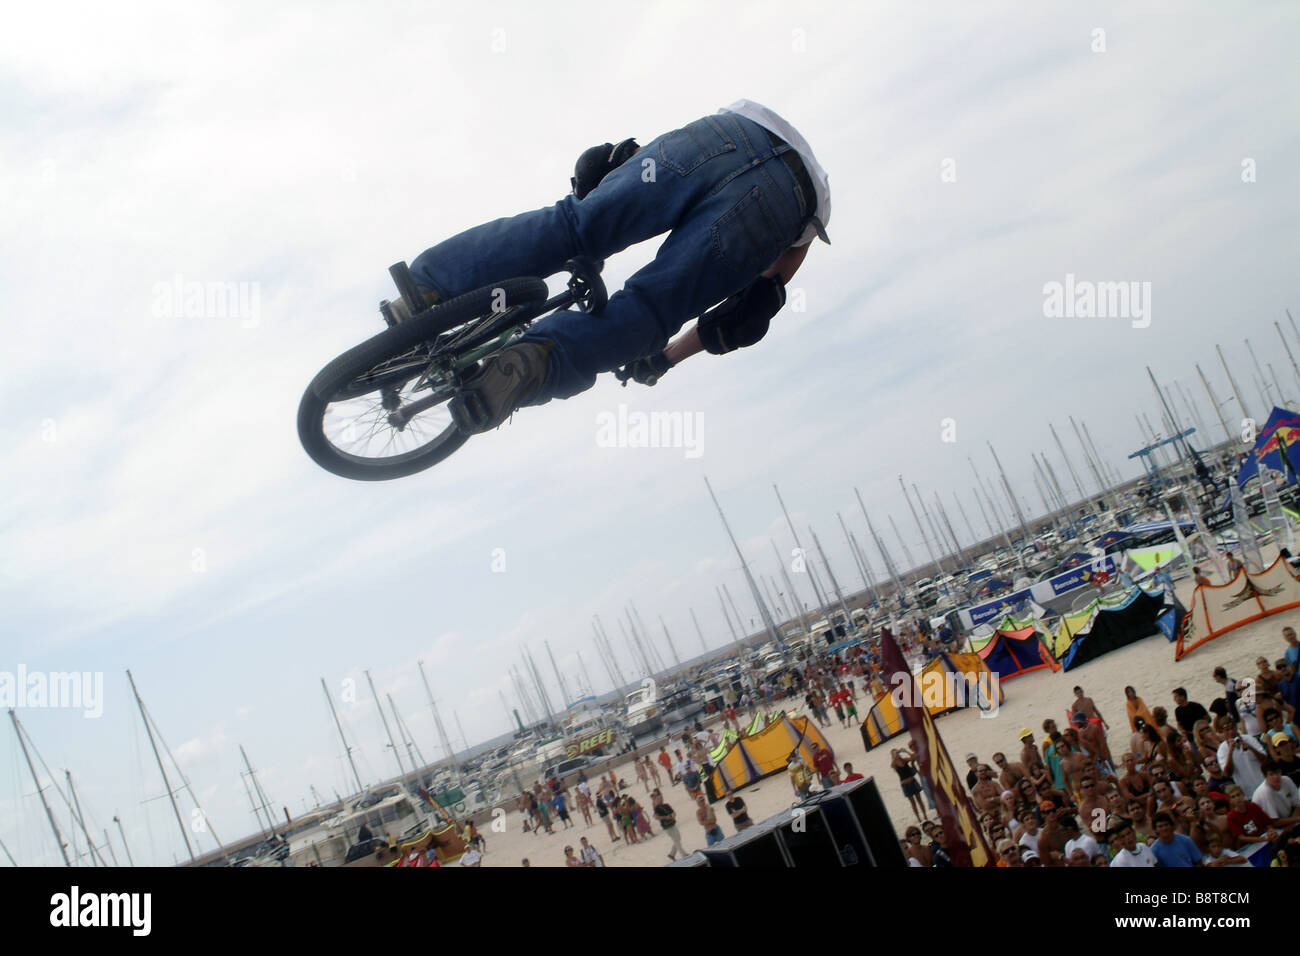 césped Gobernable Arne BMX-rider después de saltar desde una rampa, España, Palma de Mallorca,  Balearen Fotografía de stock - Alamy